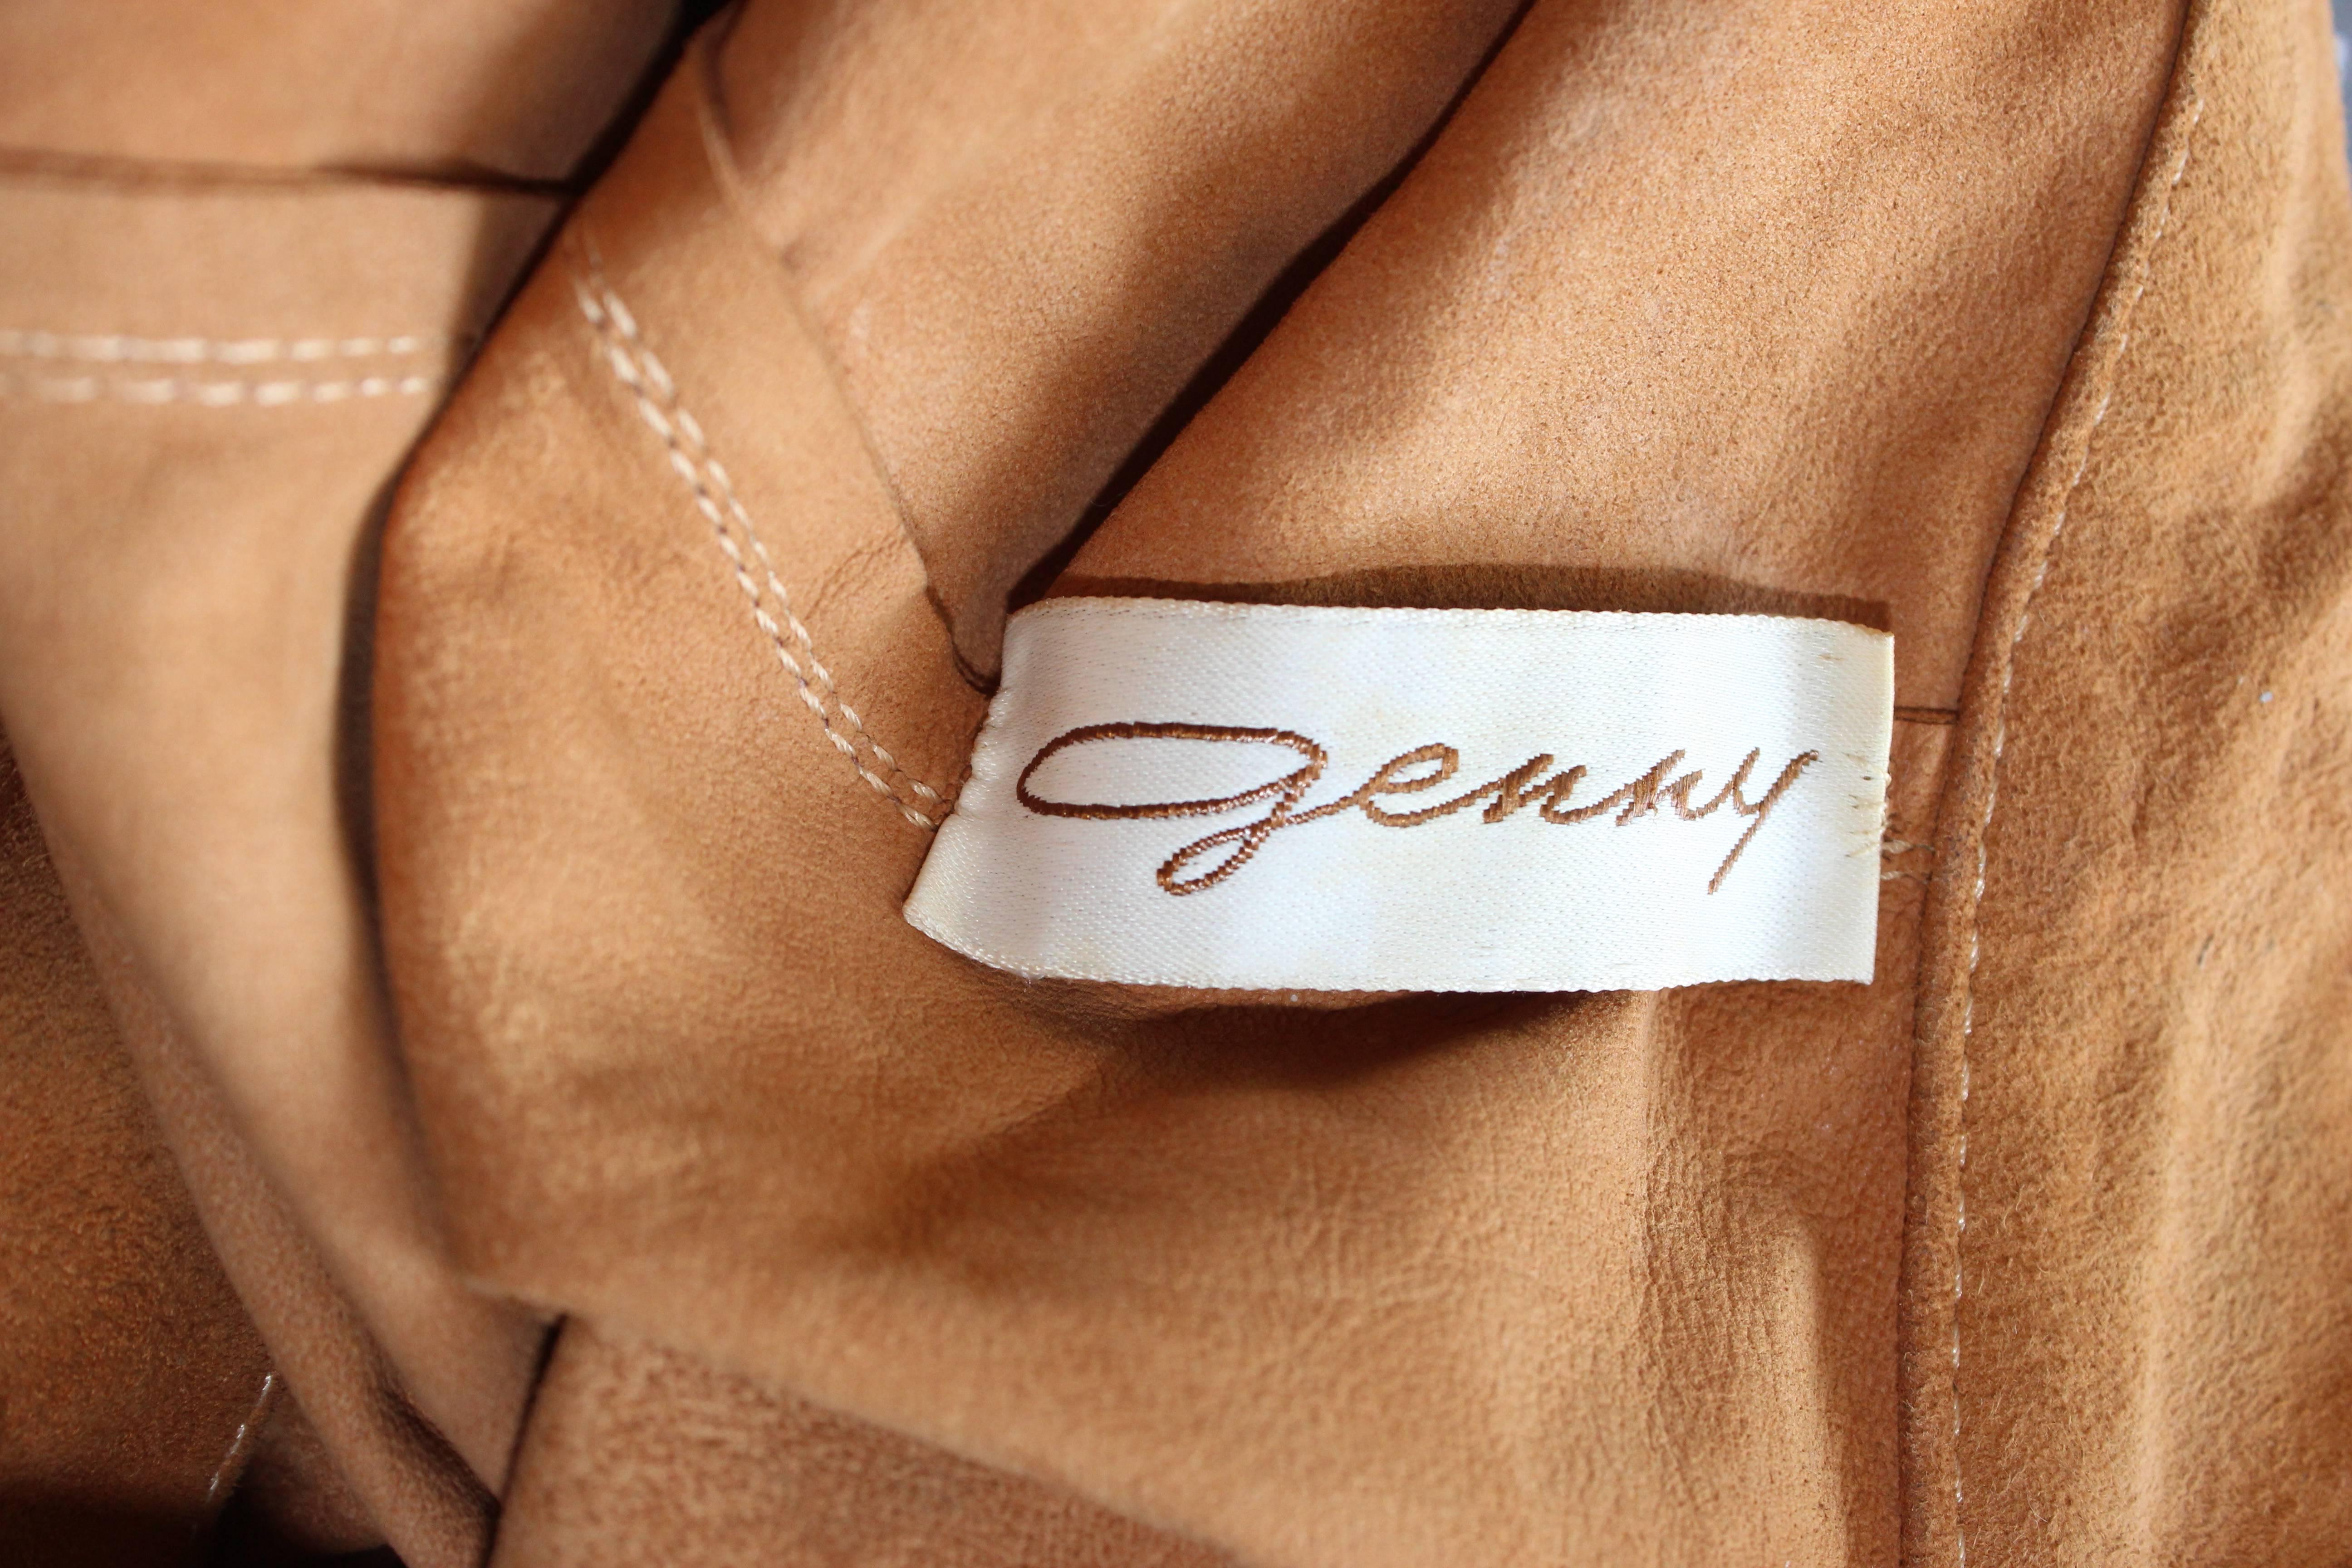 Women's 1980s Genny beige leather dress tunic size 42